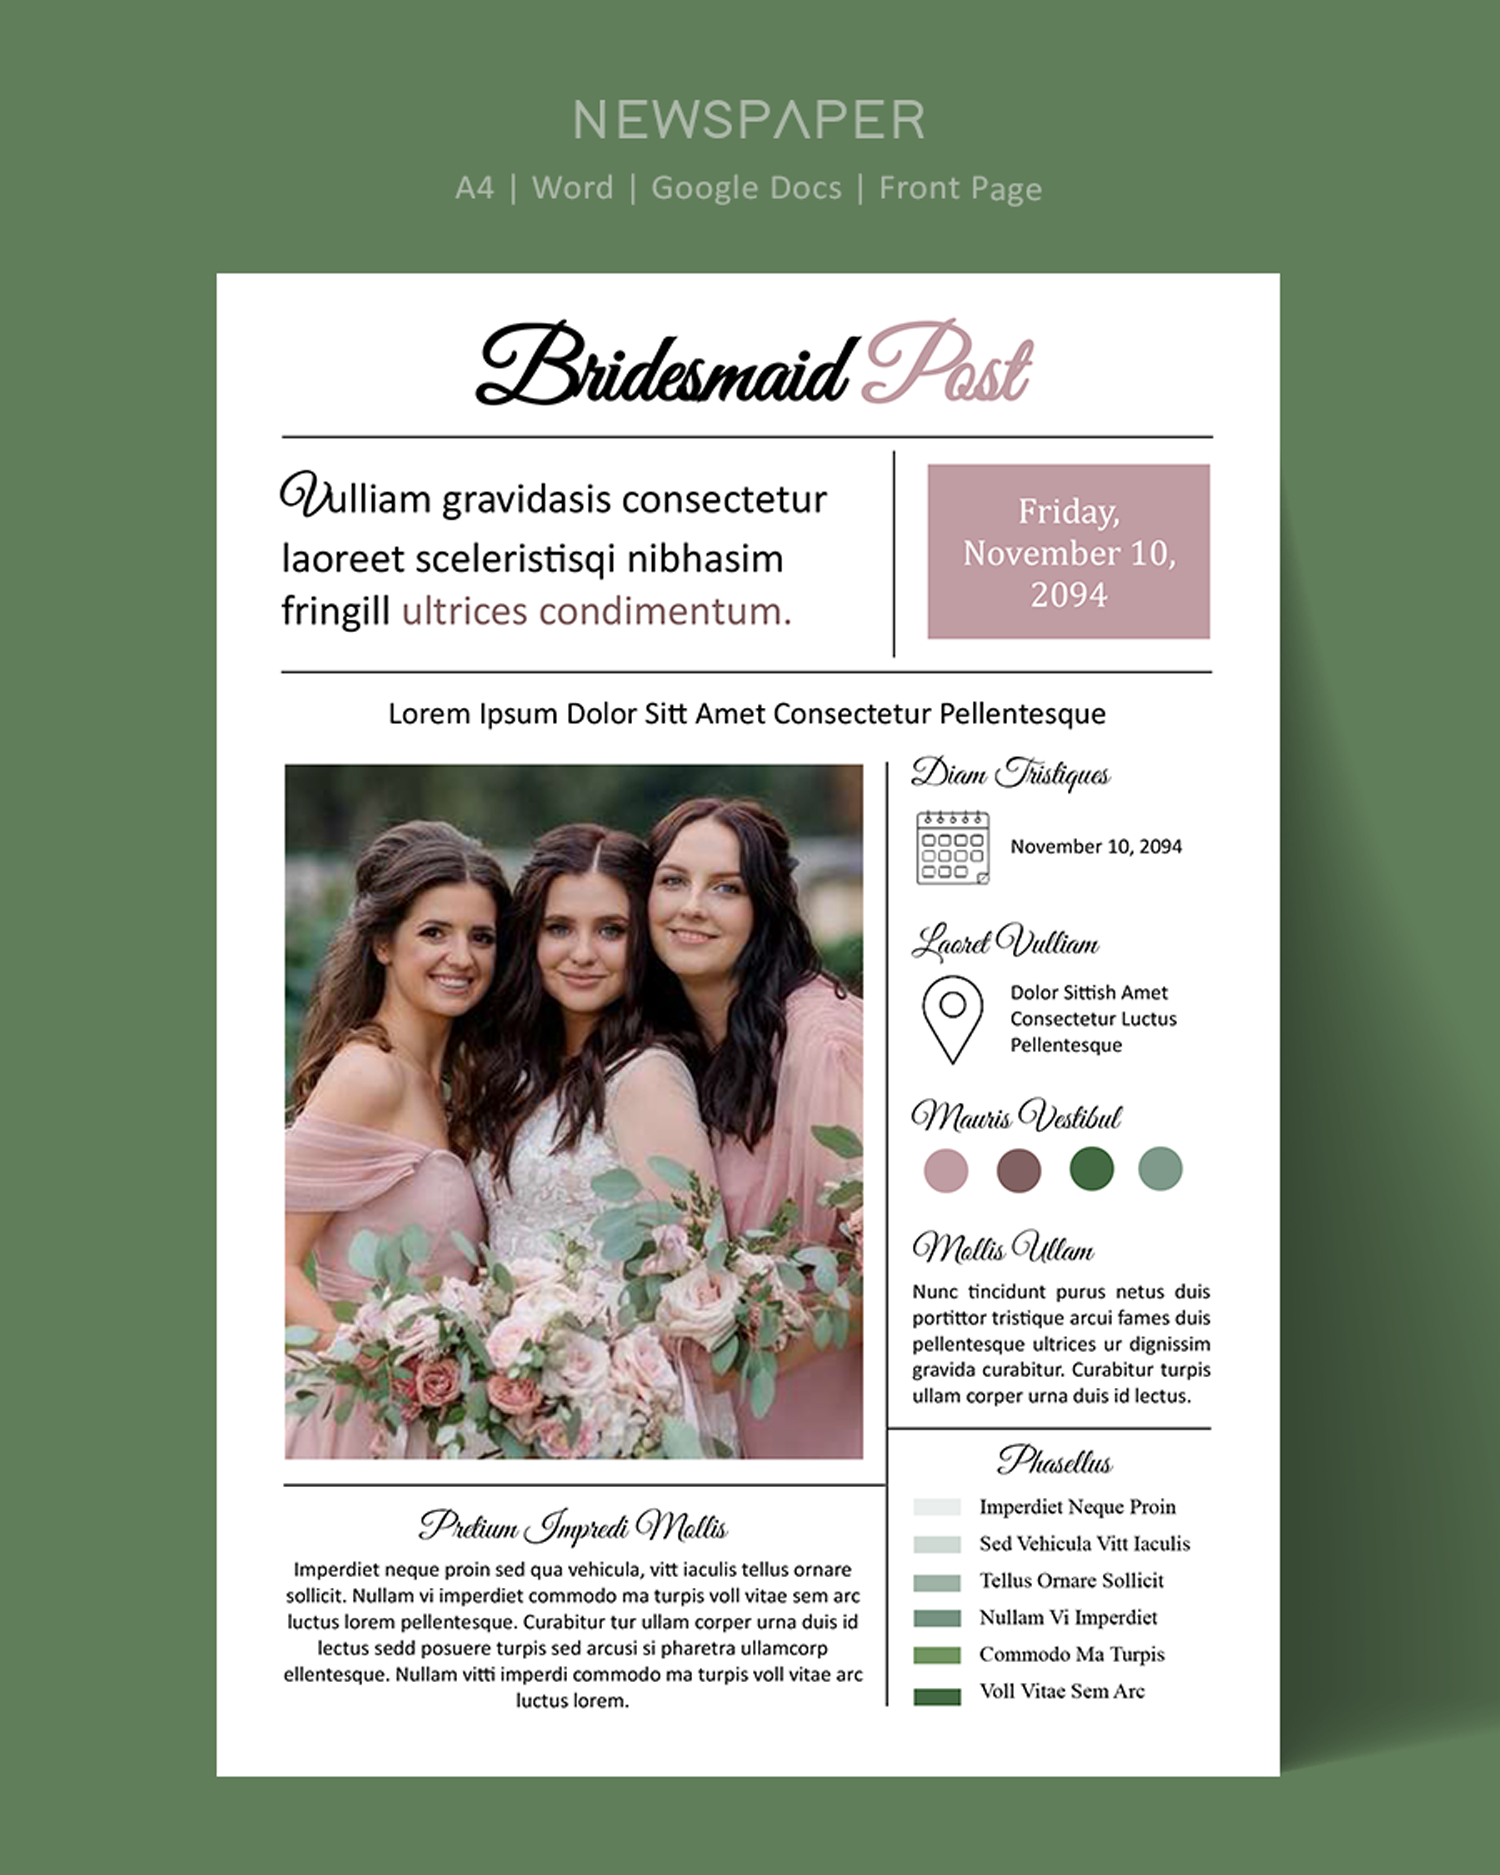 Bridesmaid Proposal Newspaper Card Template - Word, Google Docs